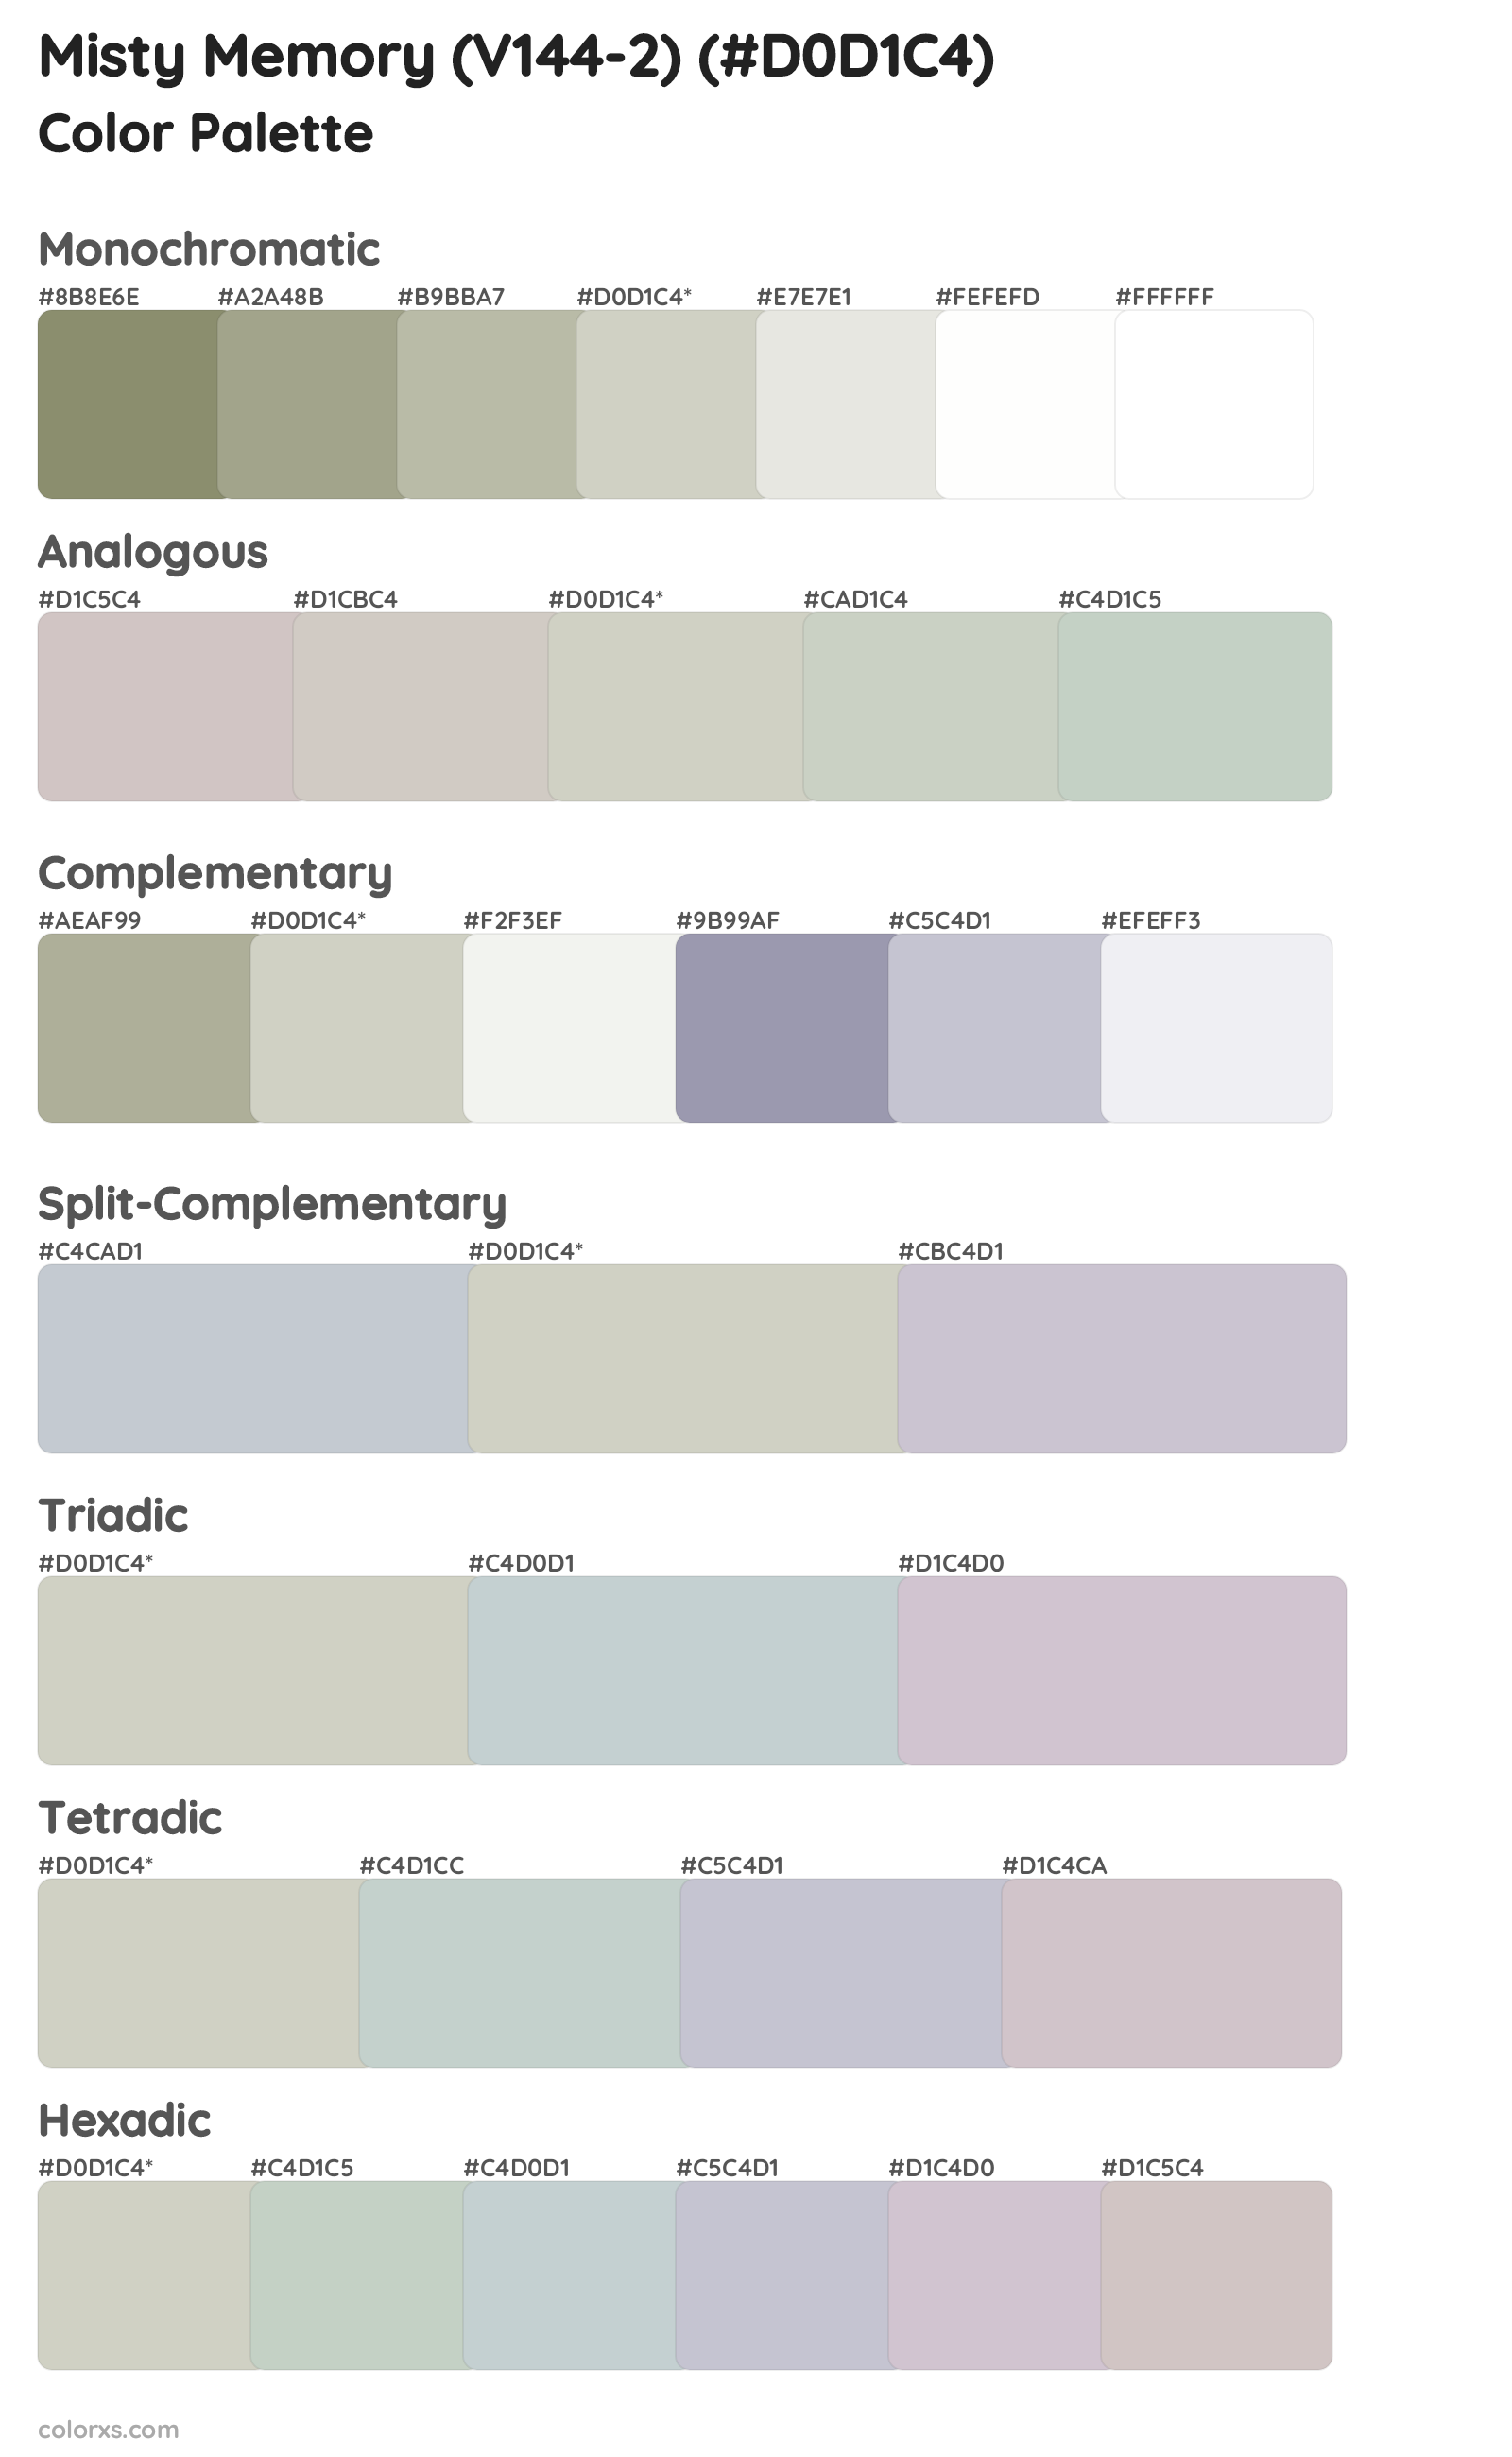 Misty Memory (V144-2) Color Scheme Palettes